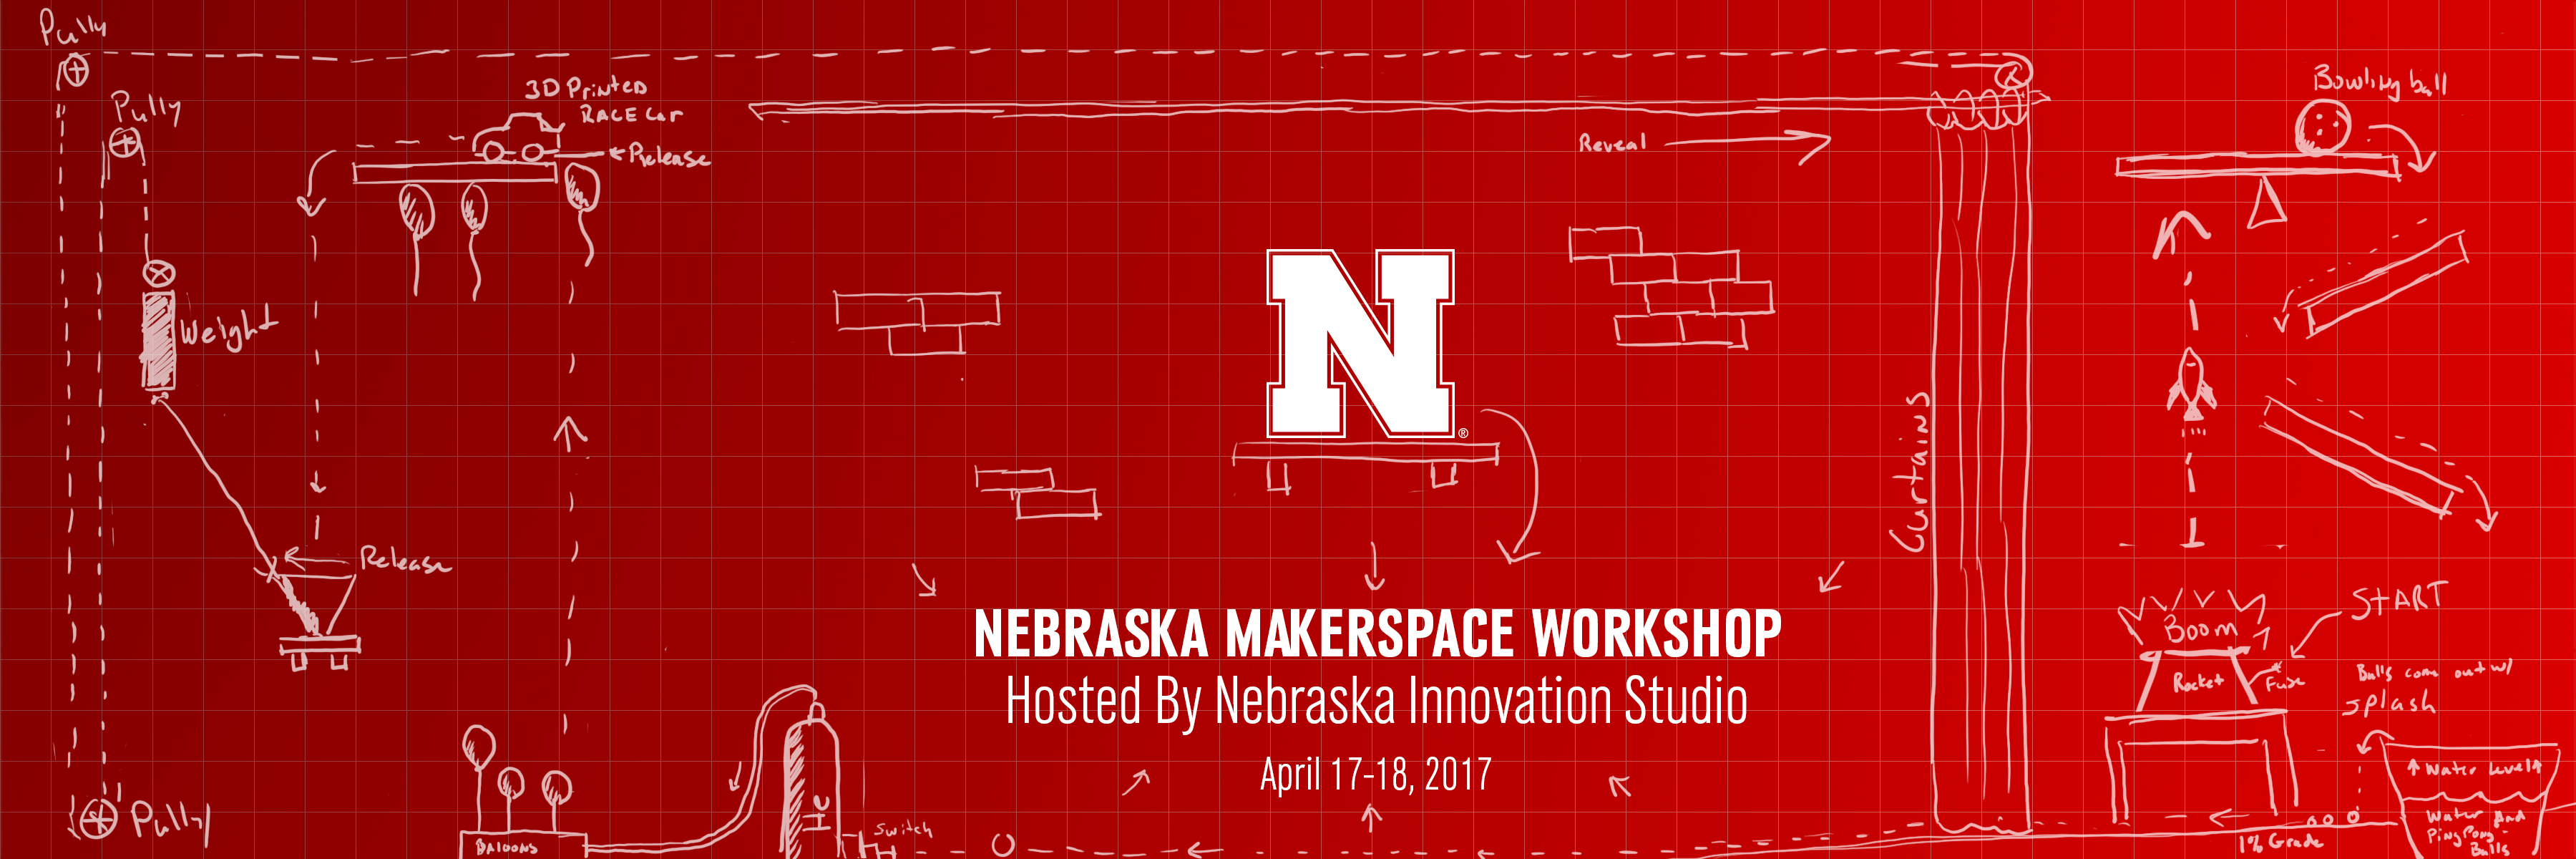 Nebraska Makerspace Workshop